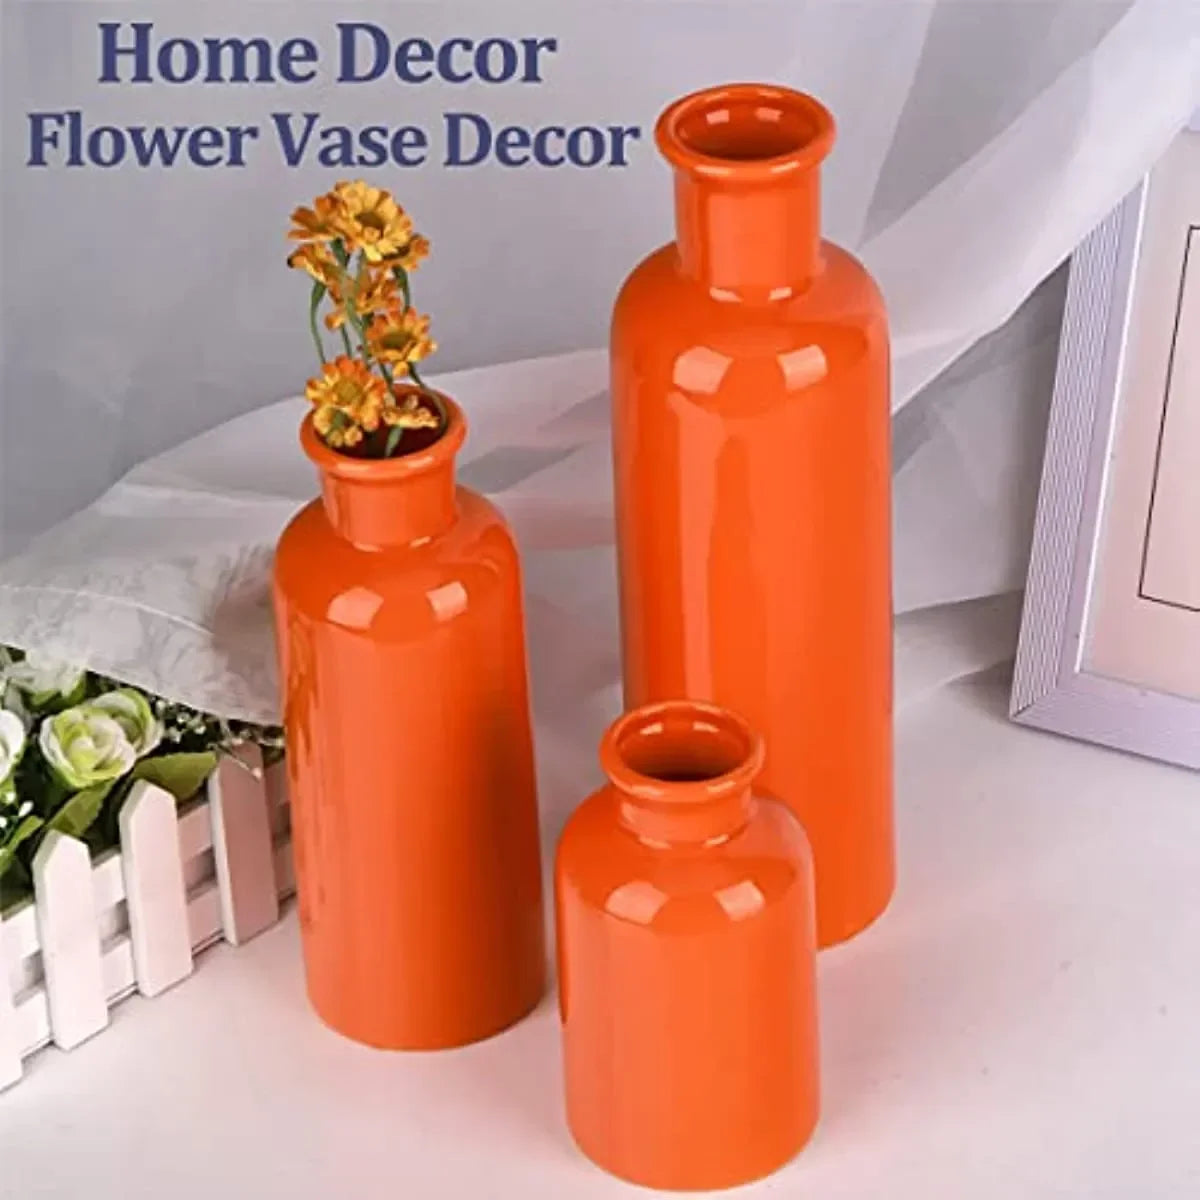 Vas keramik oranye ditetapkan untuk 3 dekorasi minimalis modern boho vas rumah pertanian rumah dekorasi aksen centerpieces ruang tamu